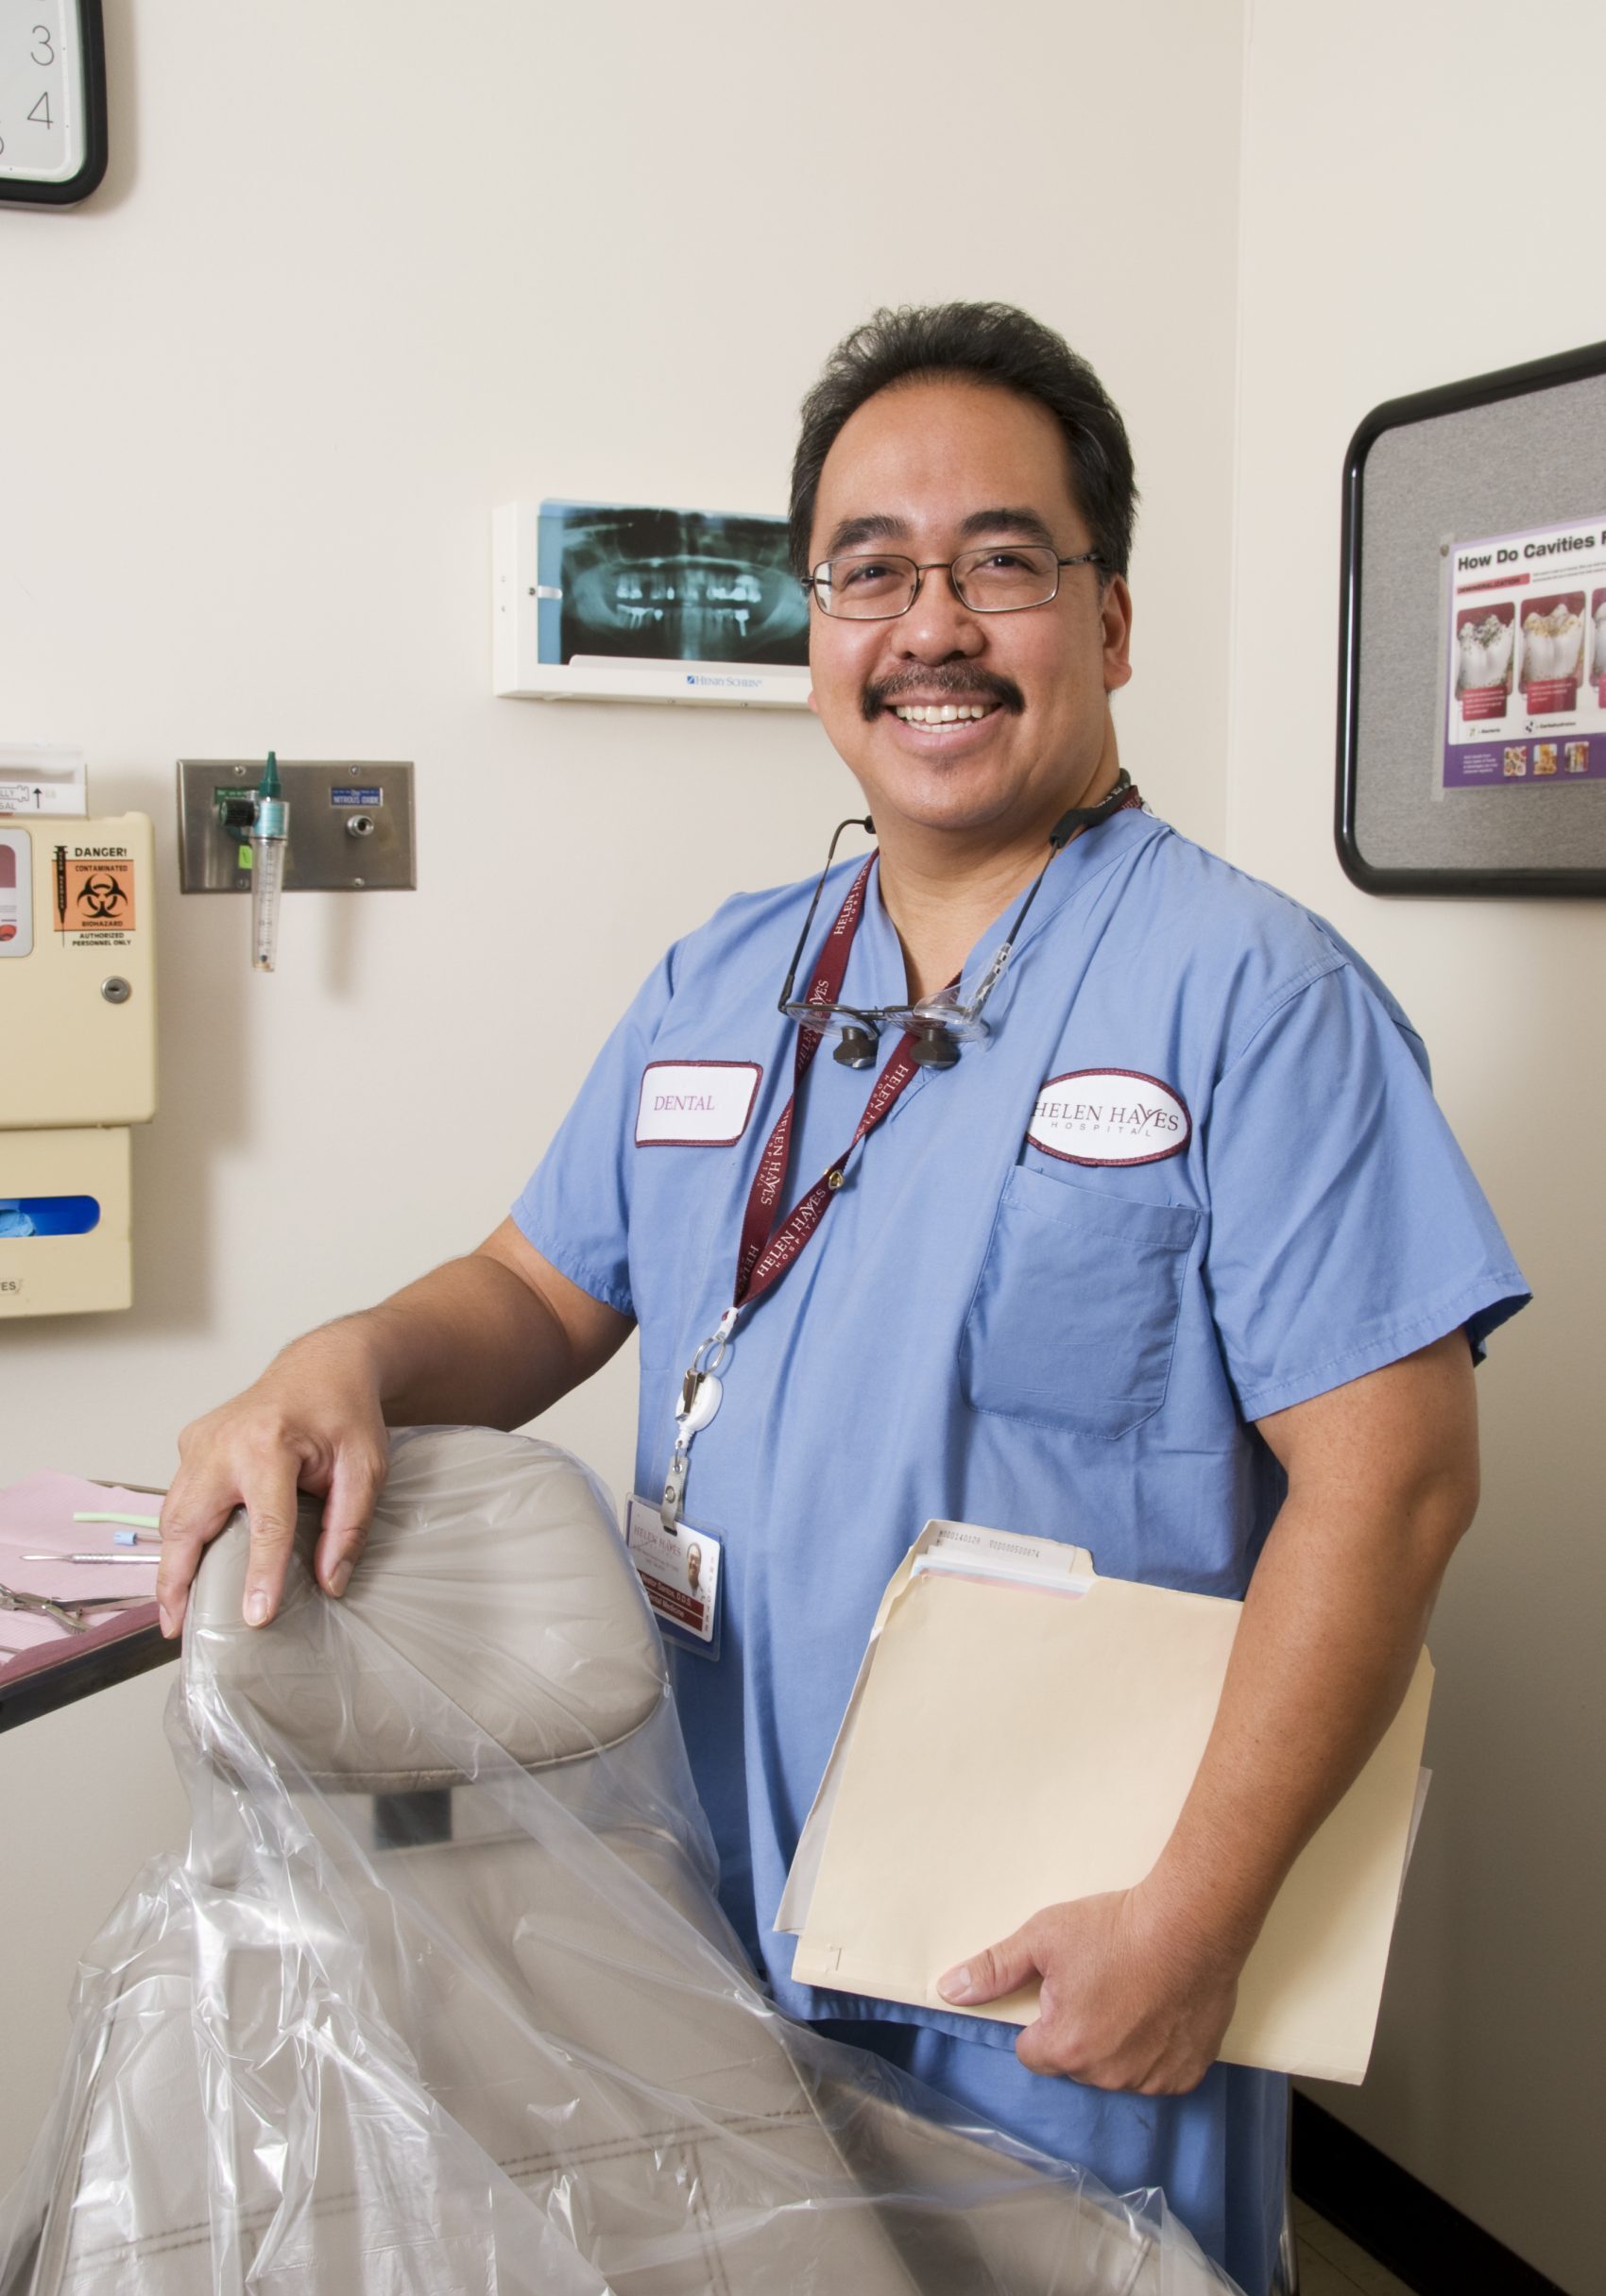 Portrait of Nestor G. Santos, DDS, Dentist in Dental Medicine Service at Helen Hayes Hospital